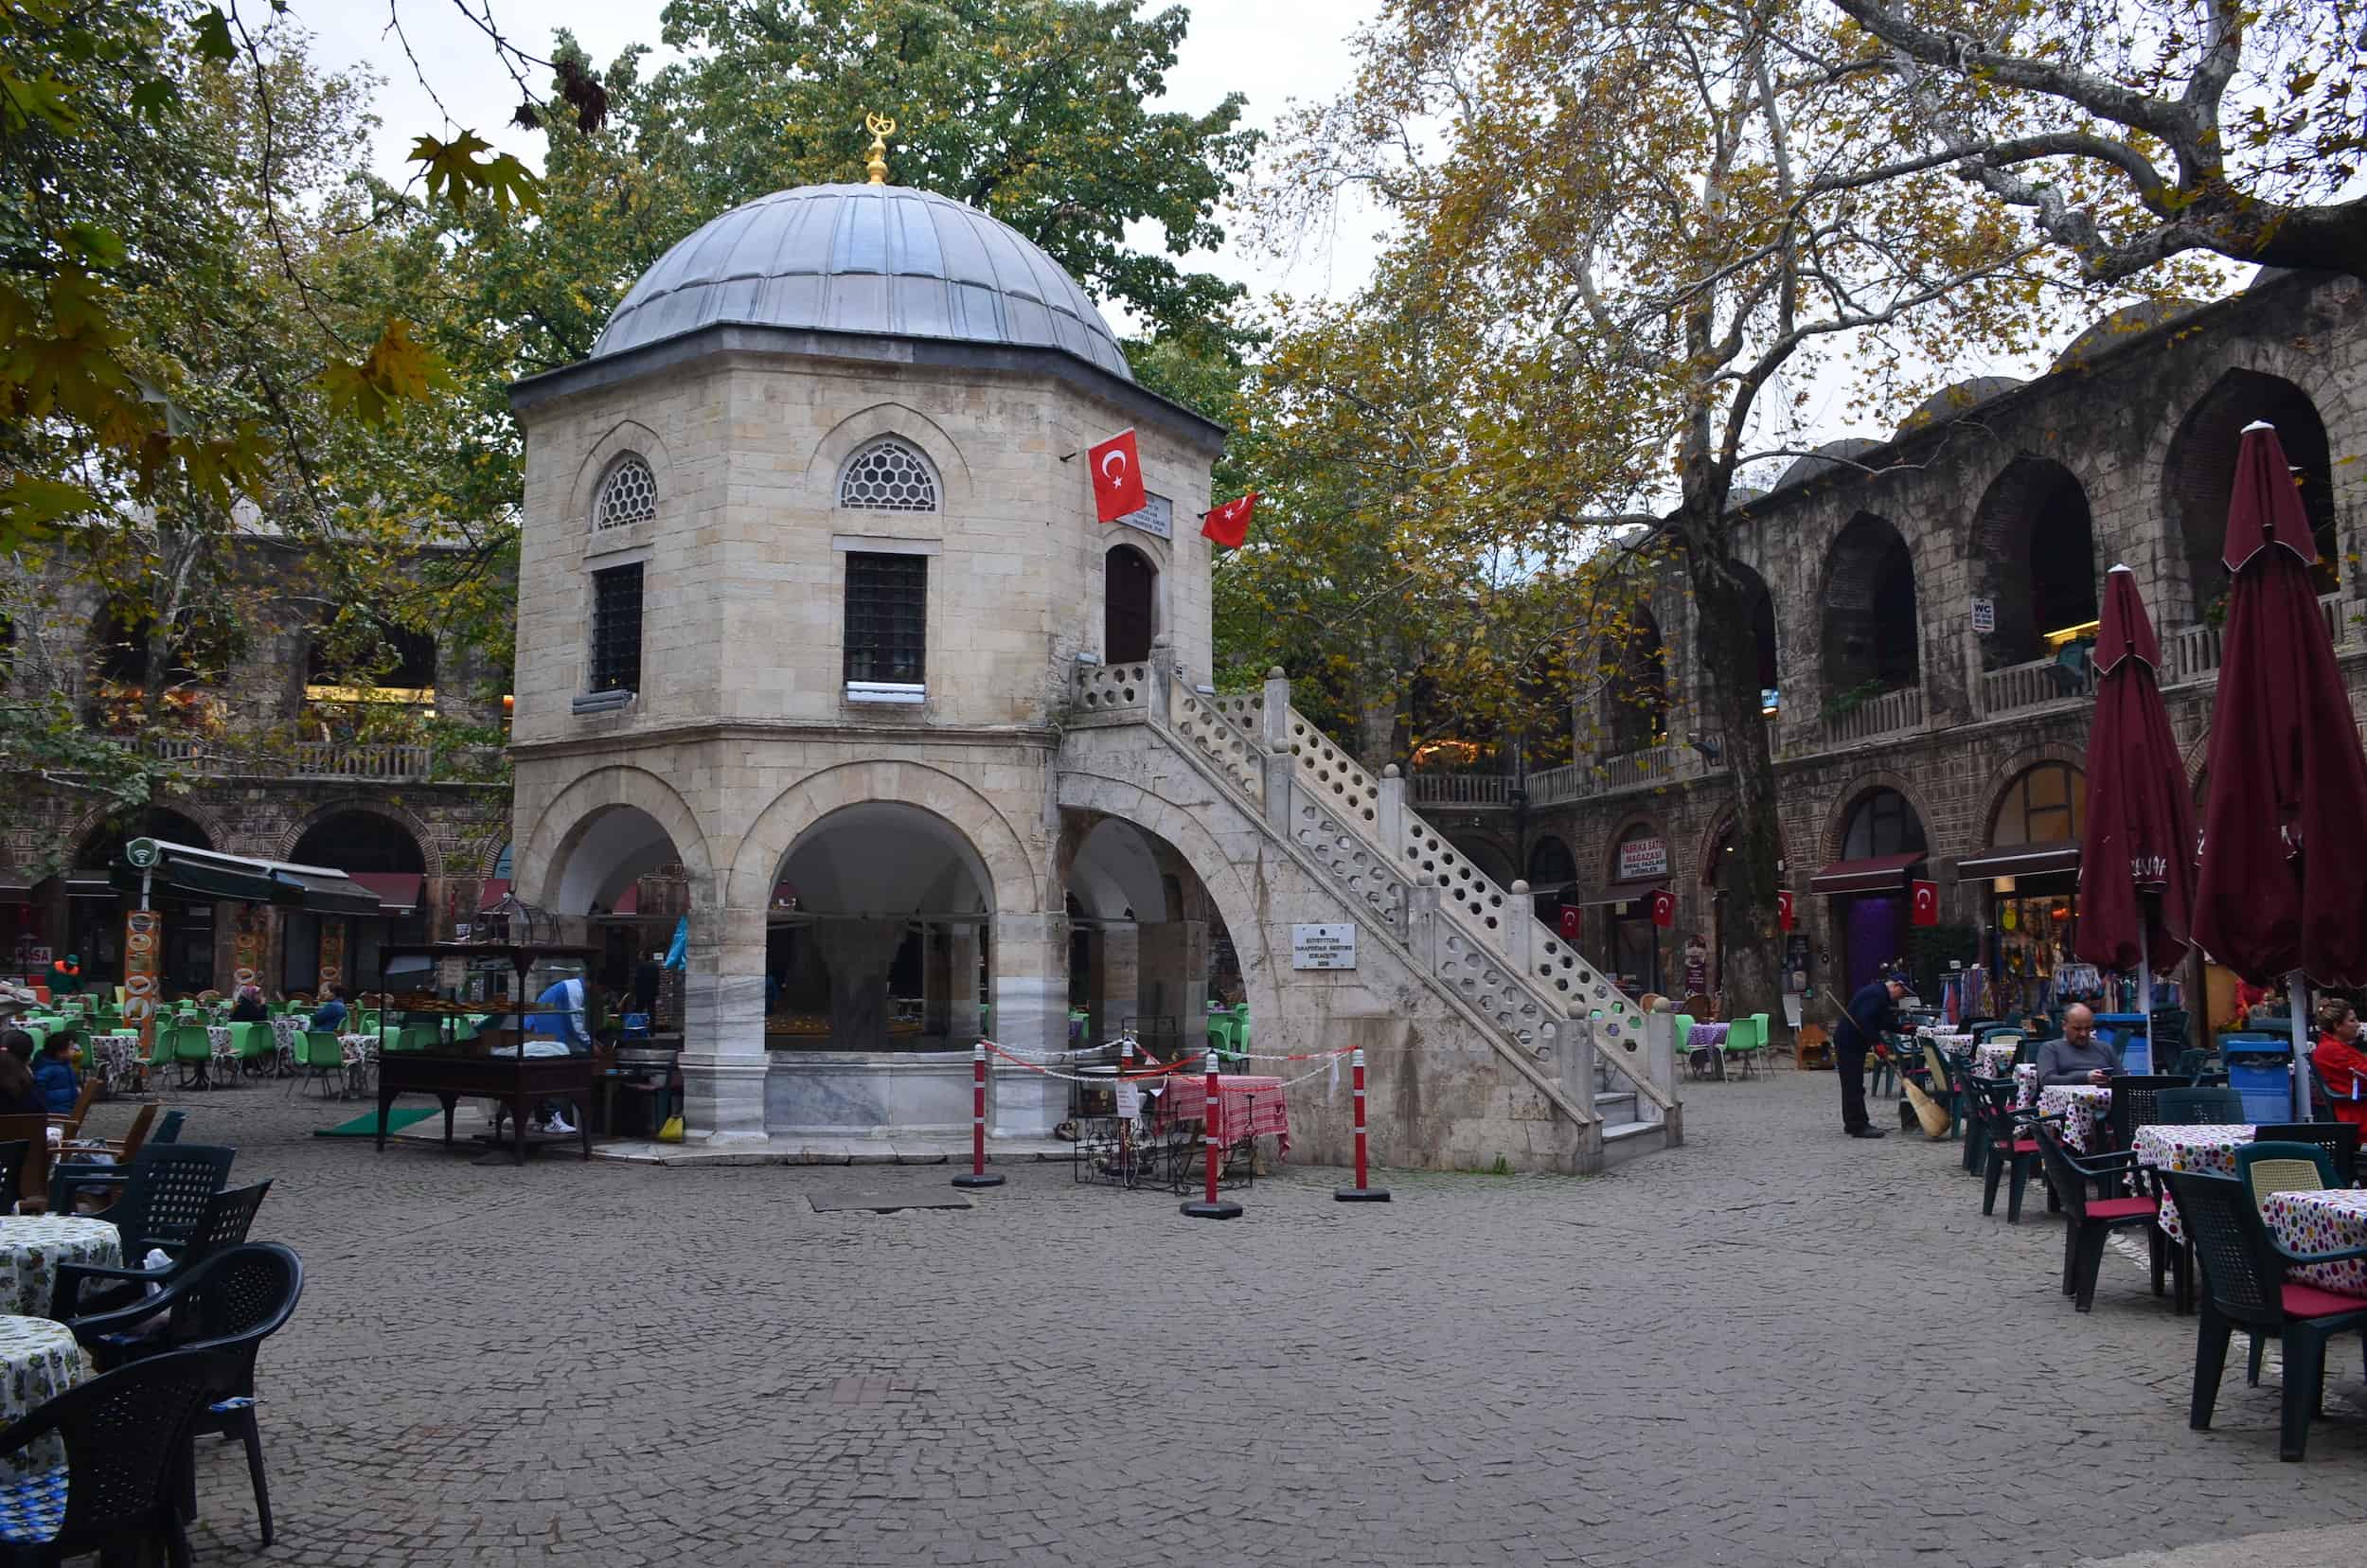 Elevated mosque at Koza Han in Bursa, Turkey